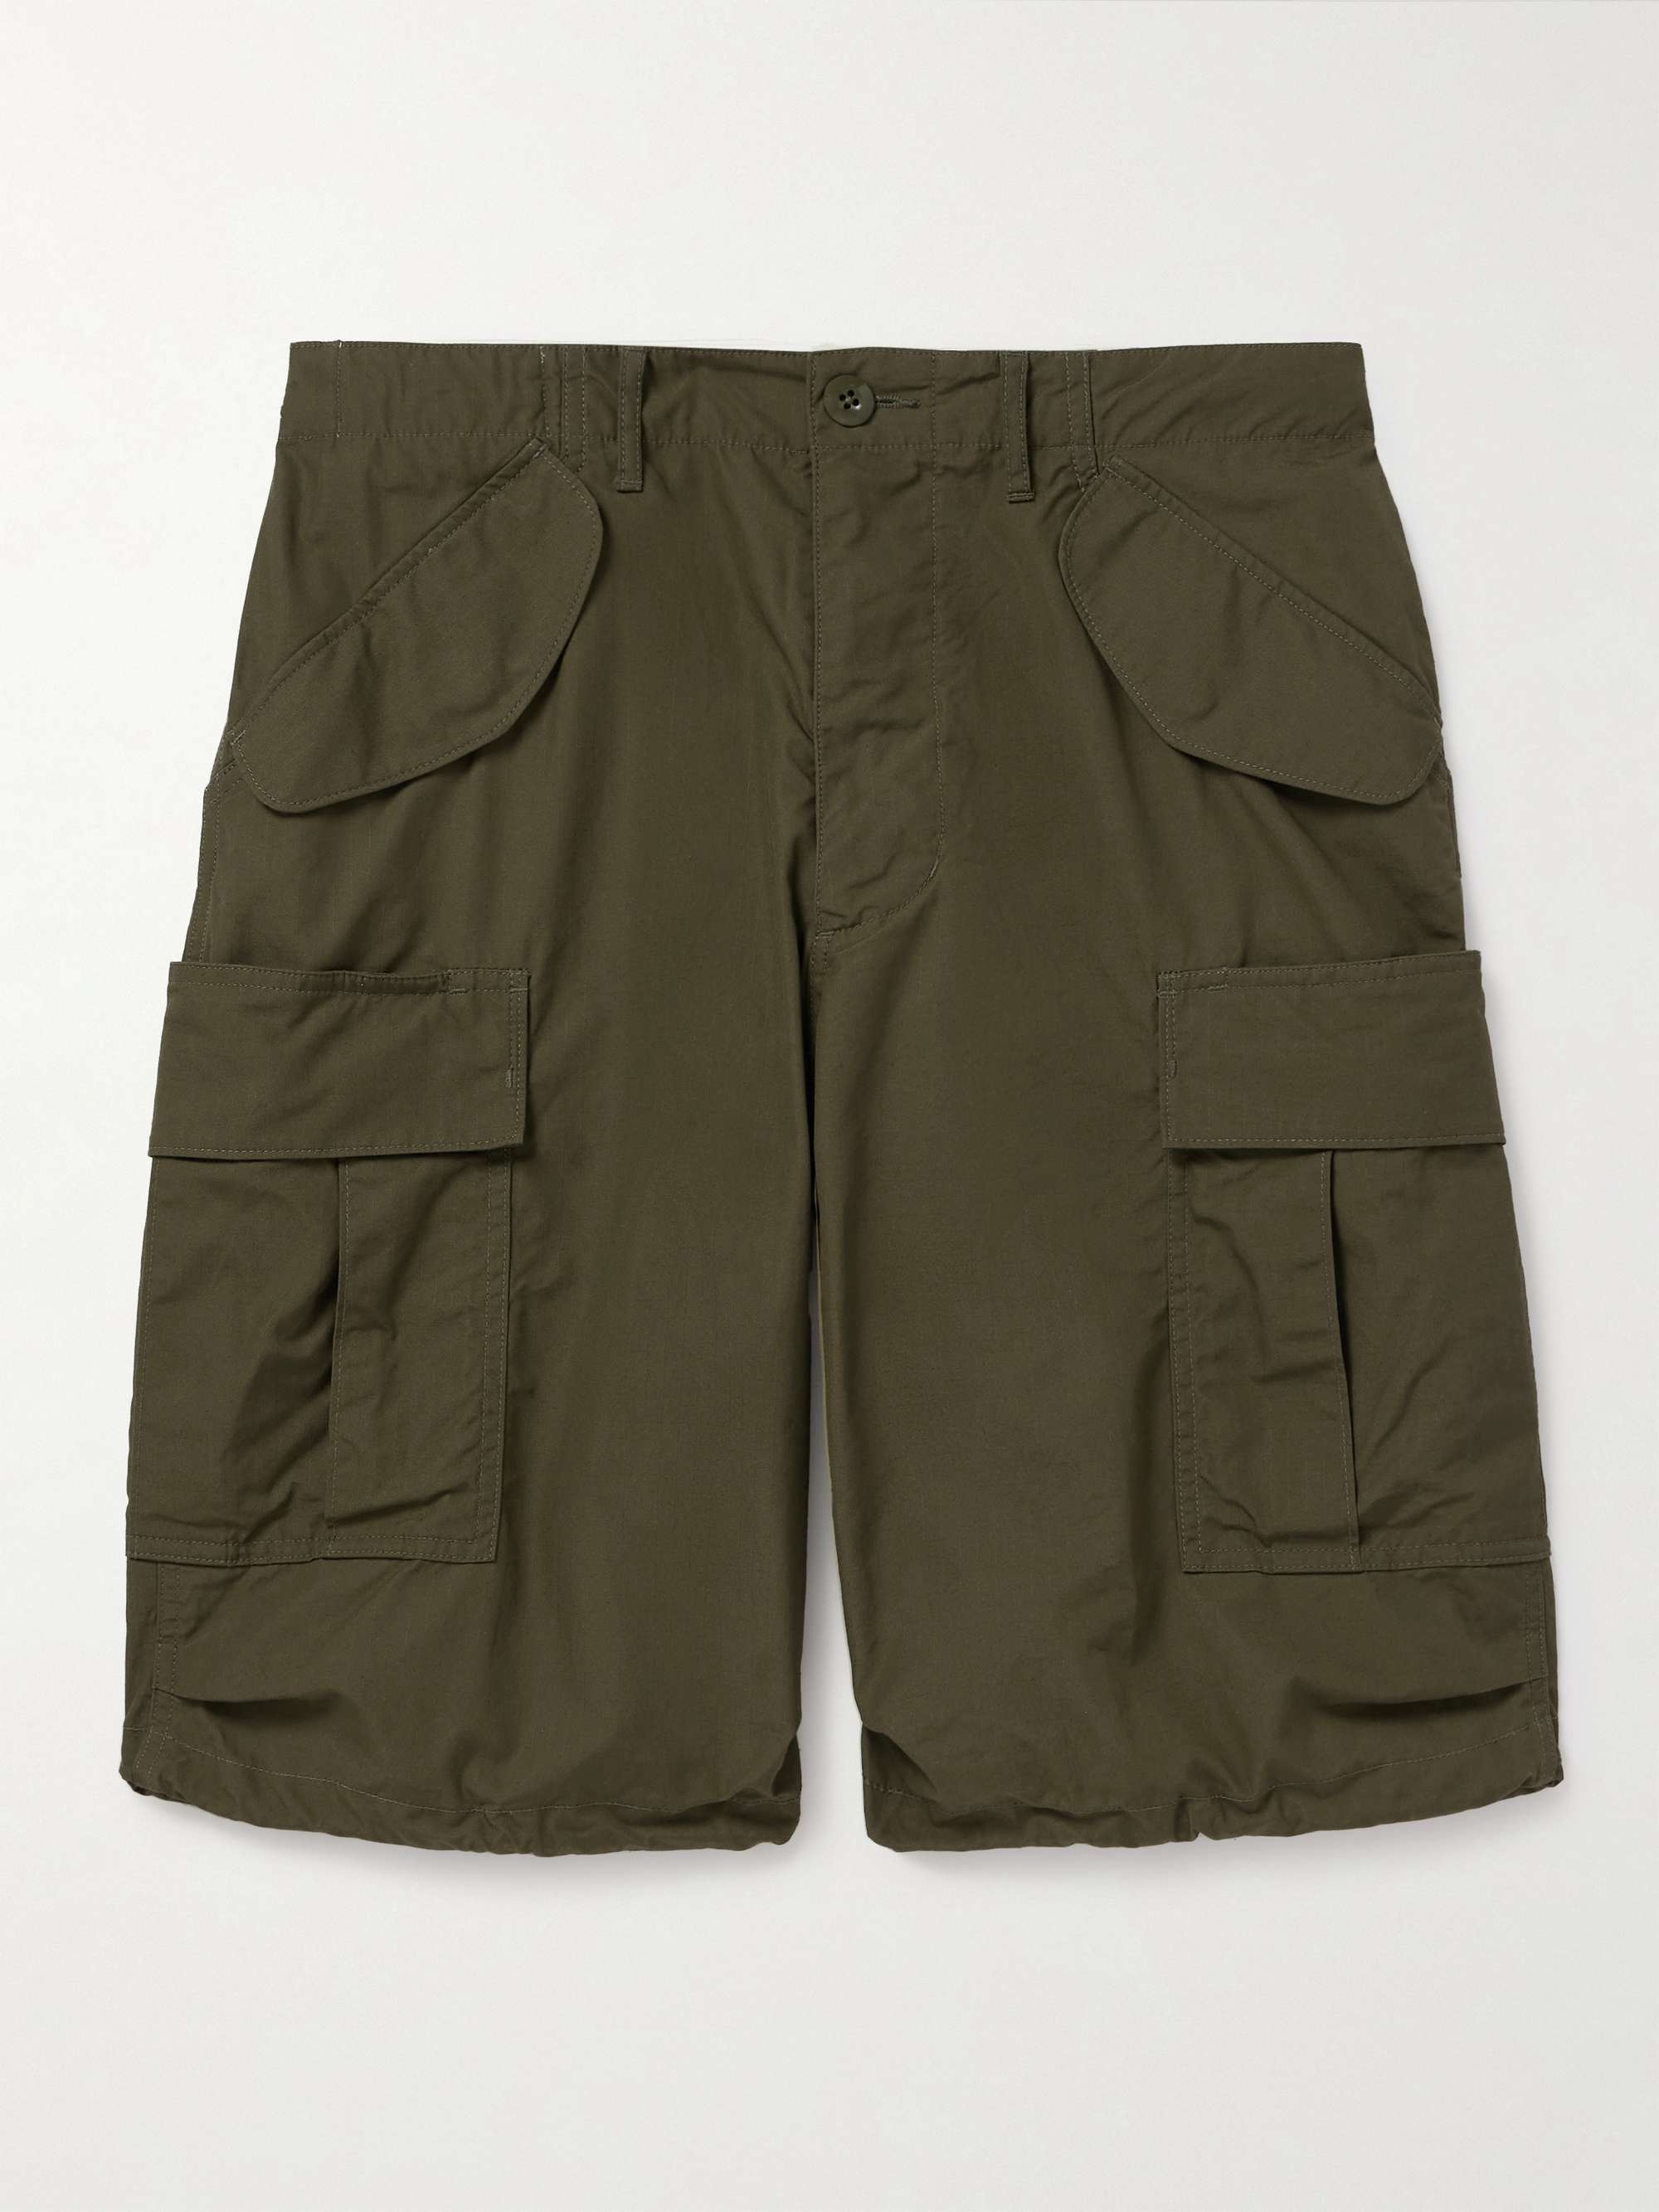 Beams Plus Straight-Leg Cotton-Ripstop Cargo Shorts - Men - Green Shorts - S